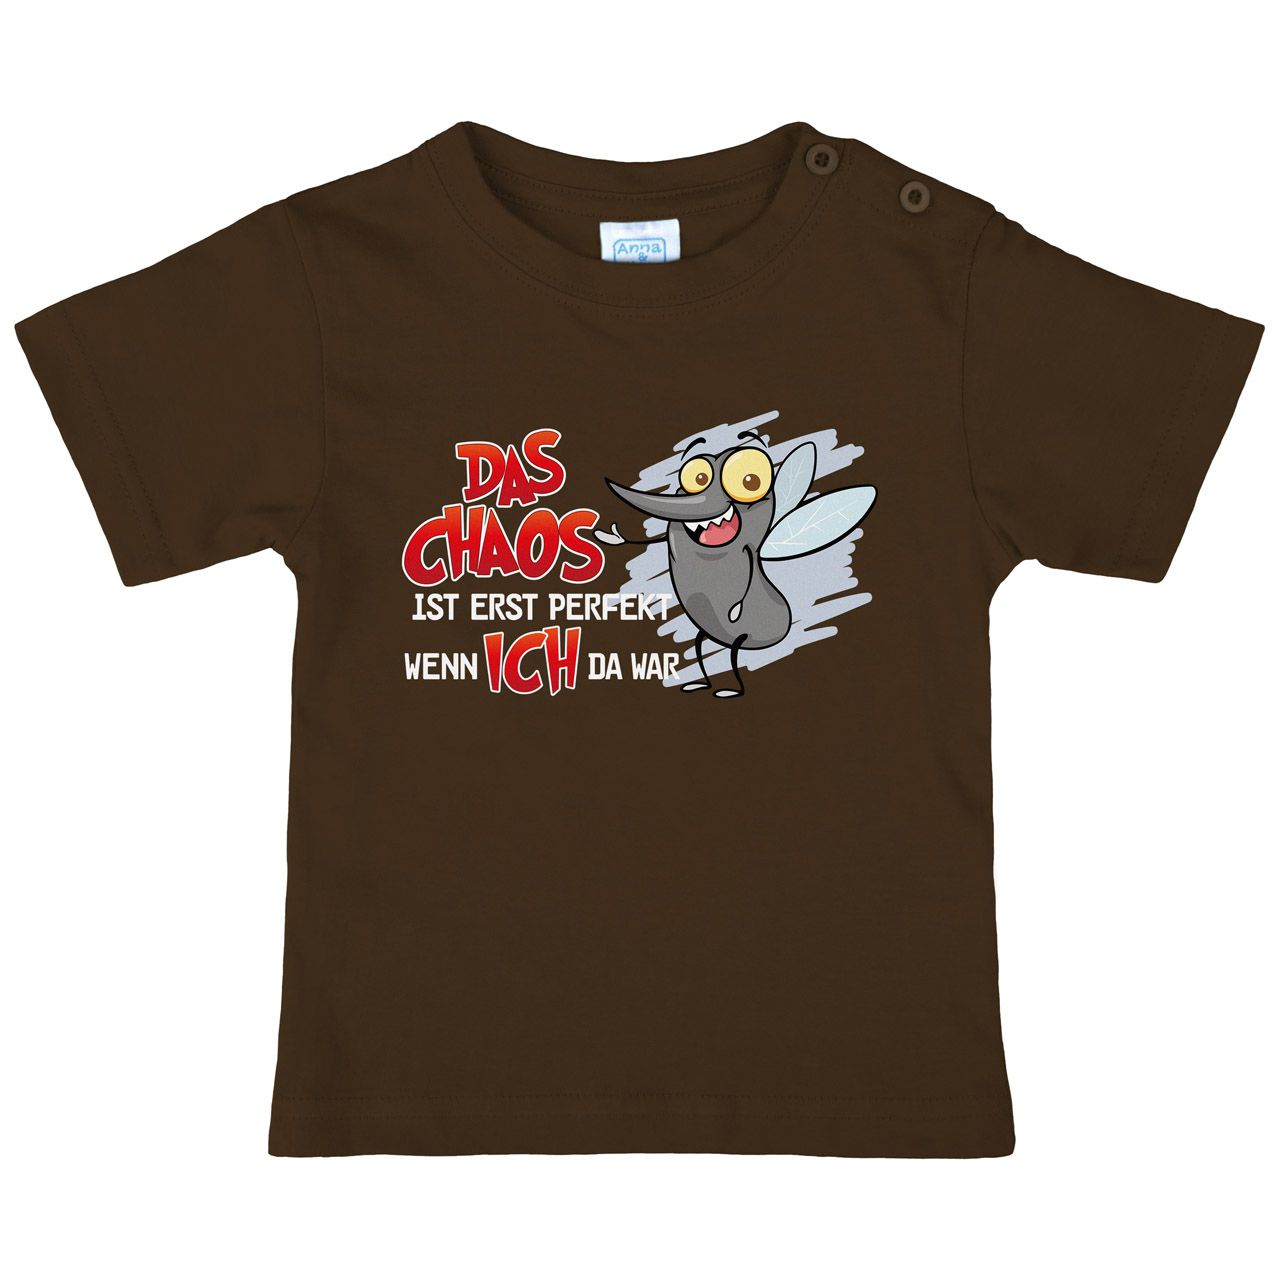 Das Chaos ist perfekt Kinder T-Shirt braun 80 / 86